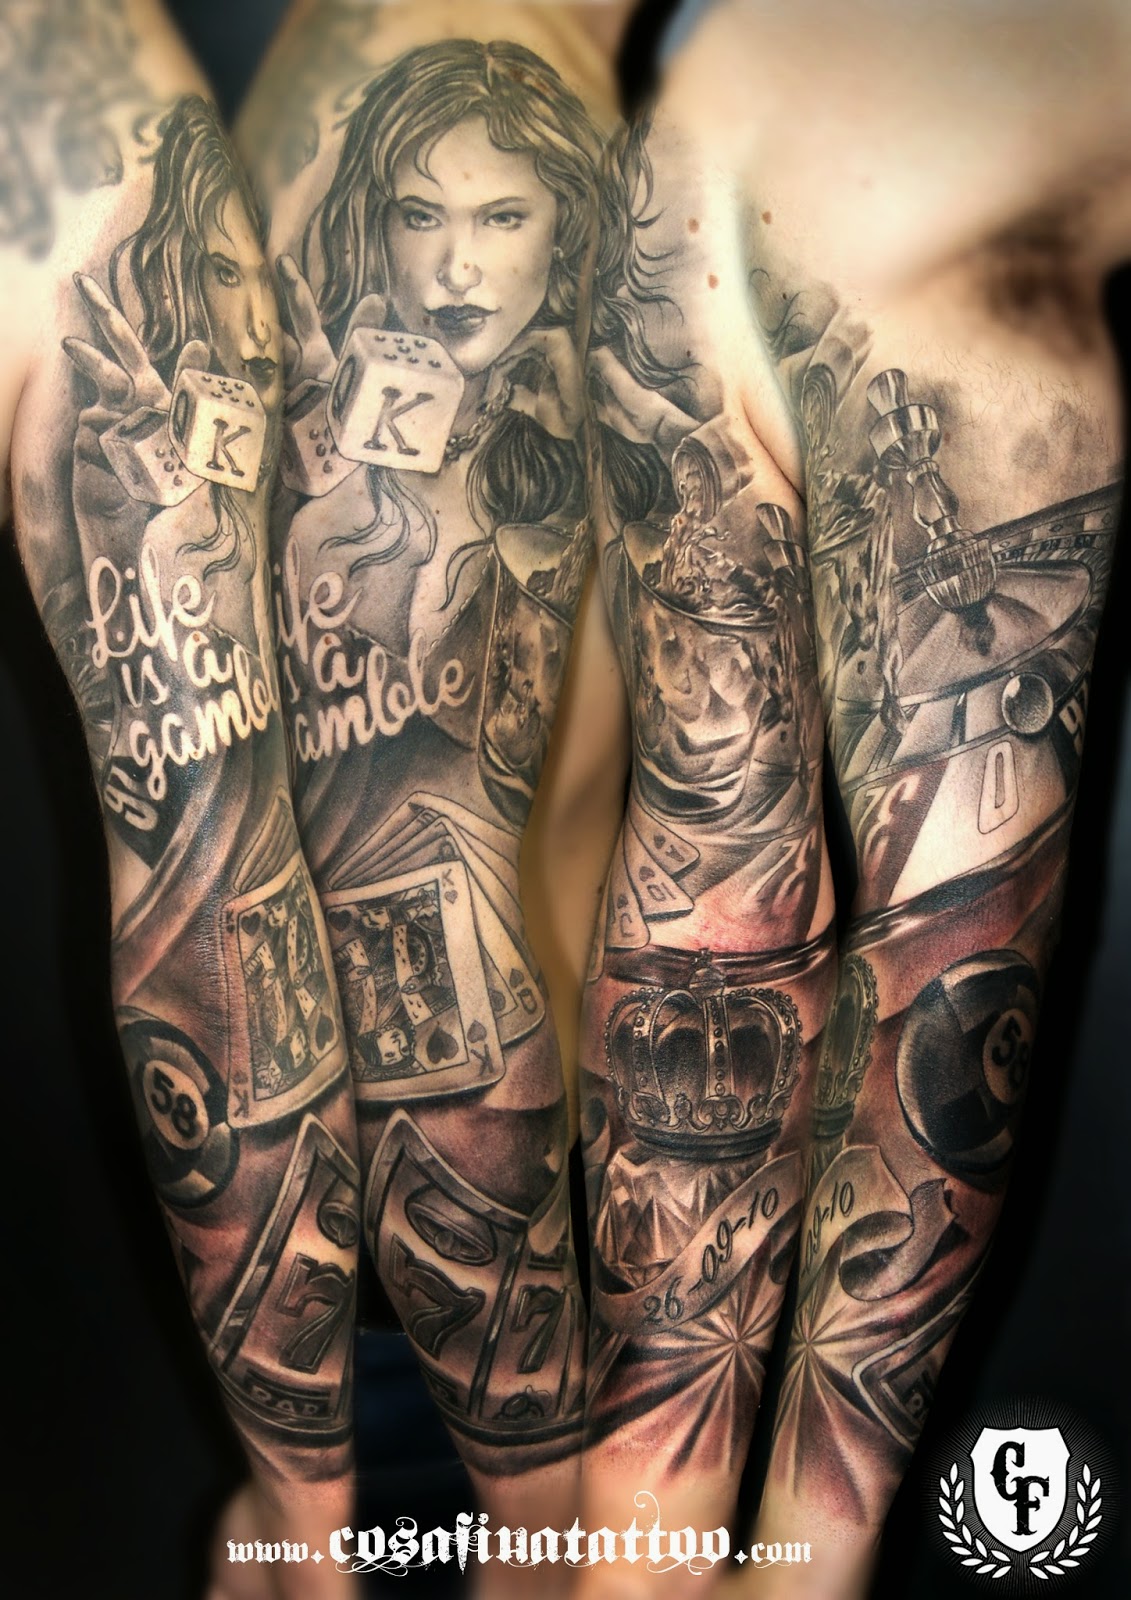 CosaFina tattoo Carlos Art Studio: tatuaje brazo chica 